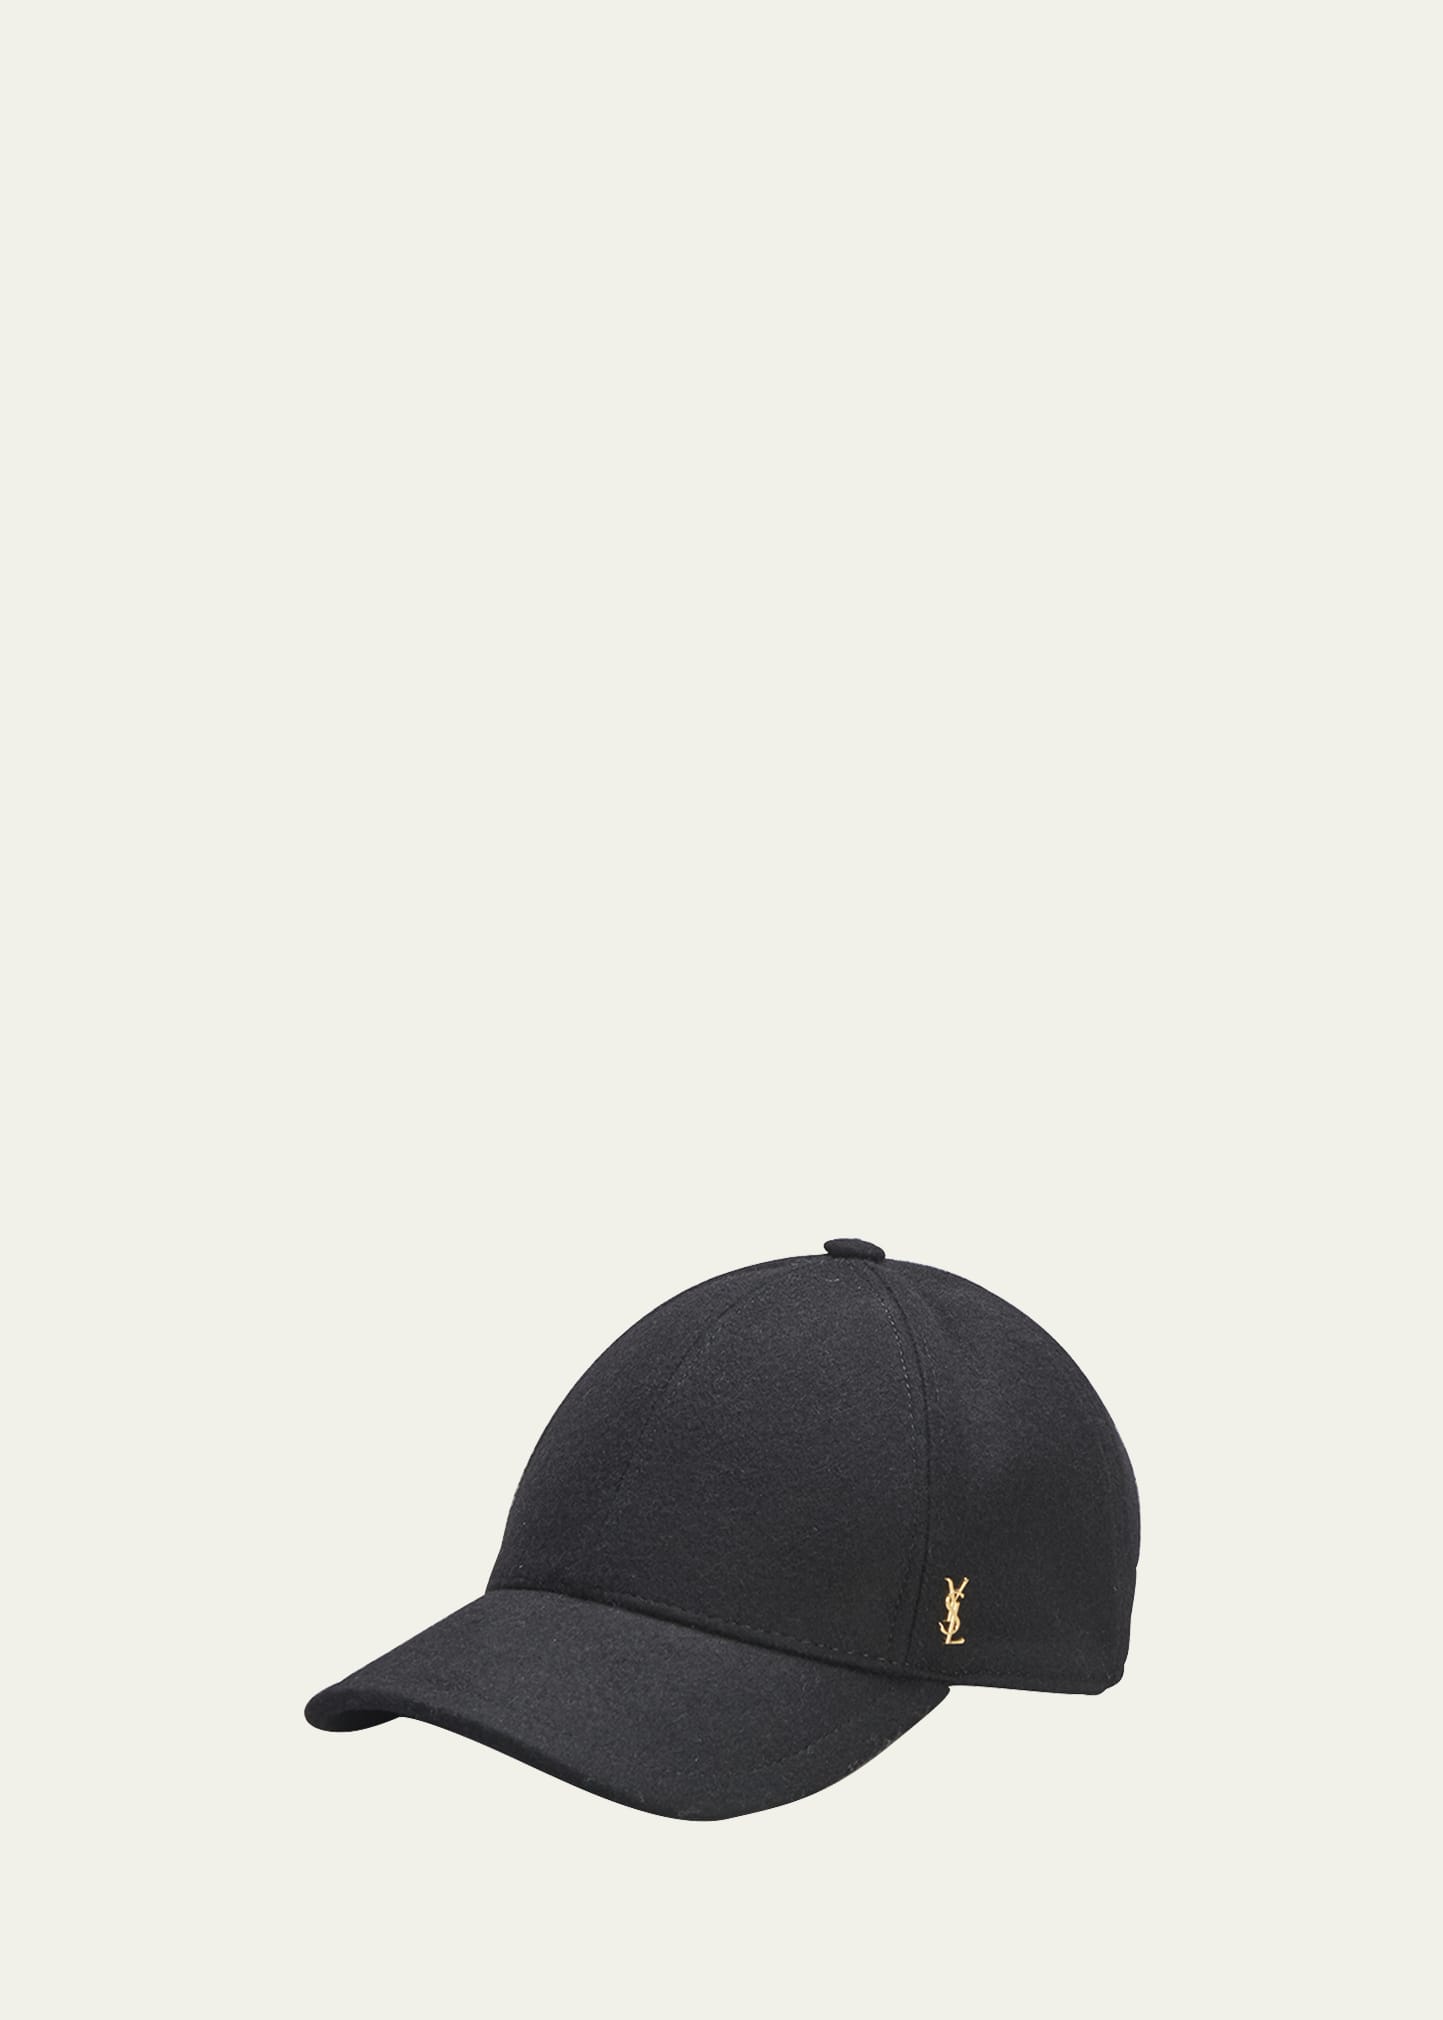 YSL Canvas Cap (Black) New Era Dad Hat